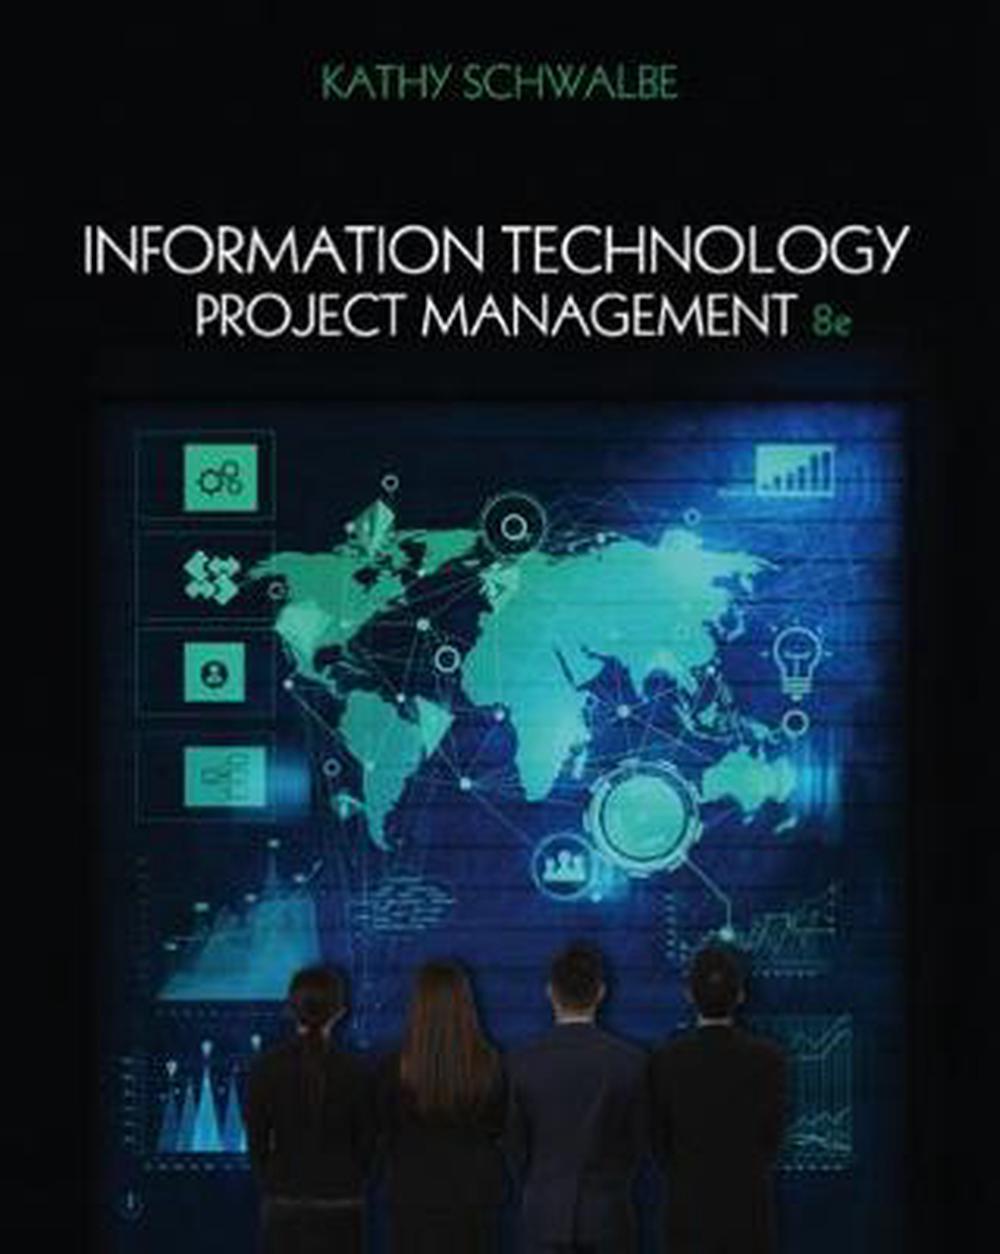 information technology project management wikipedia